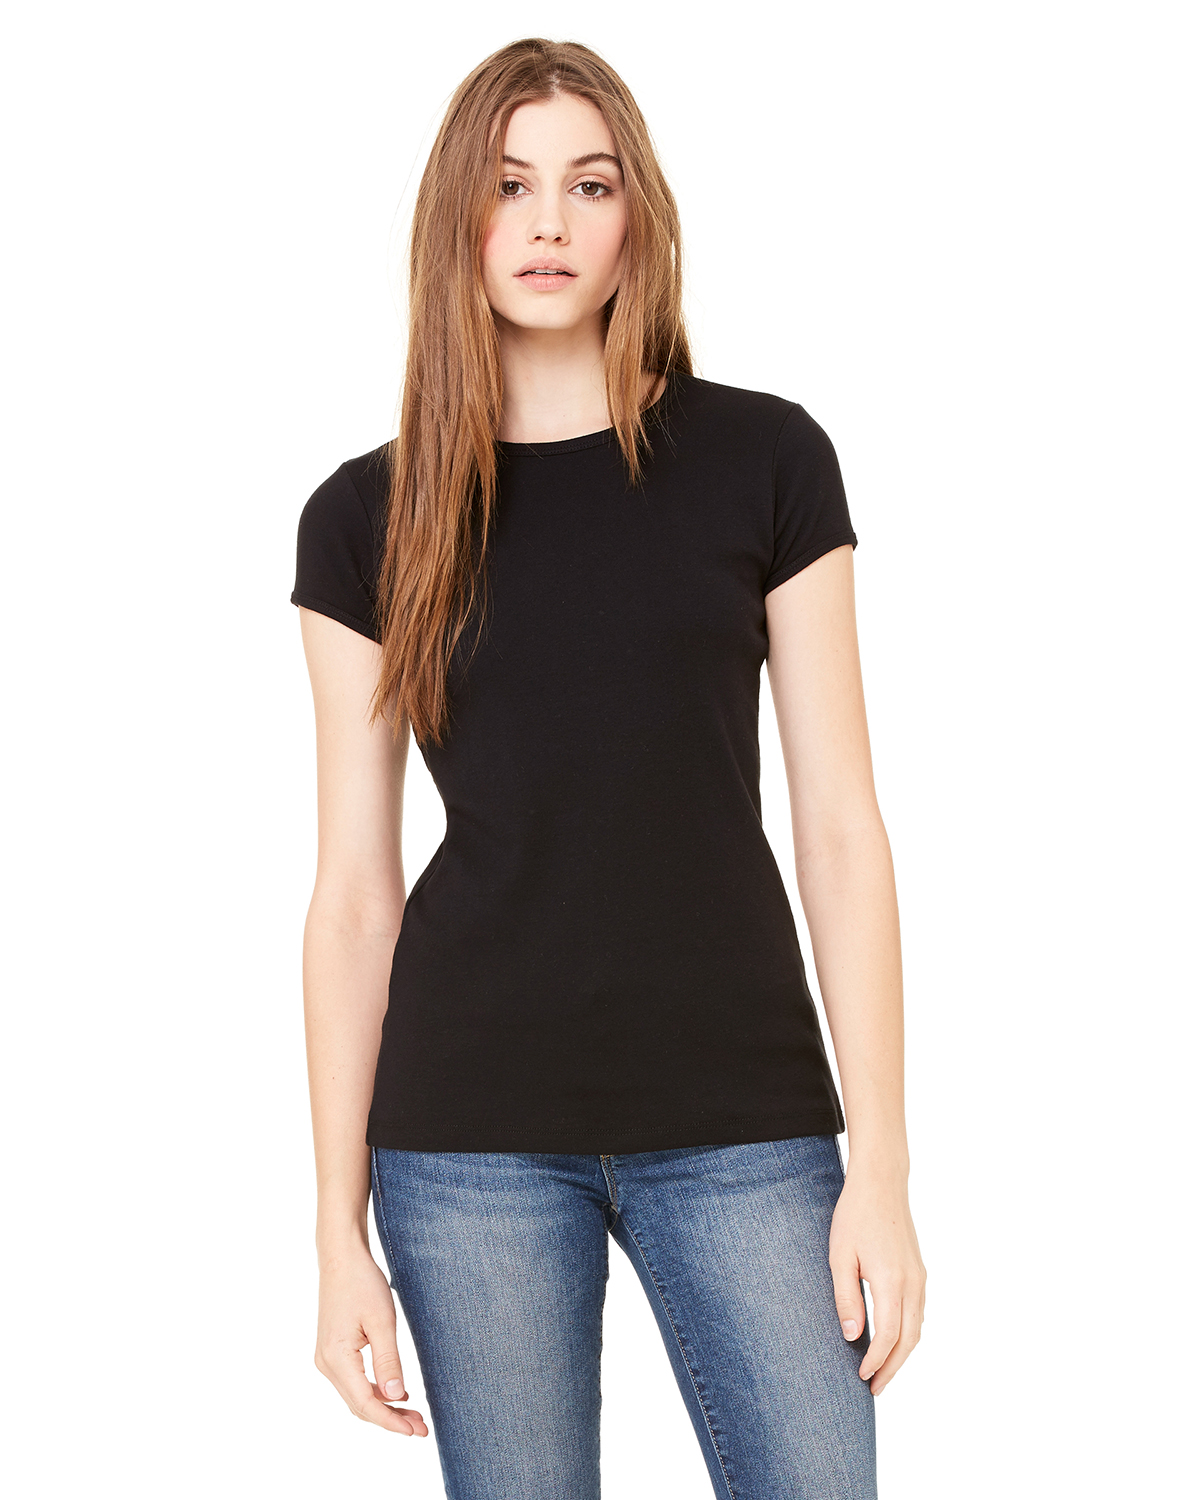 bella 6005 Ladies' Short Sleeve V-Neck T-Shirt $7.99 - T-Shirts